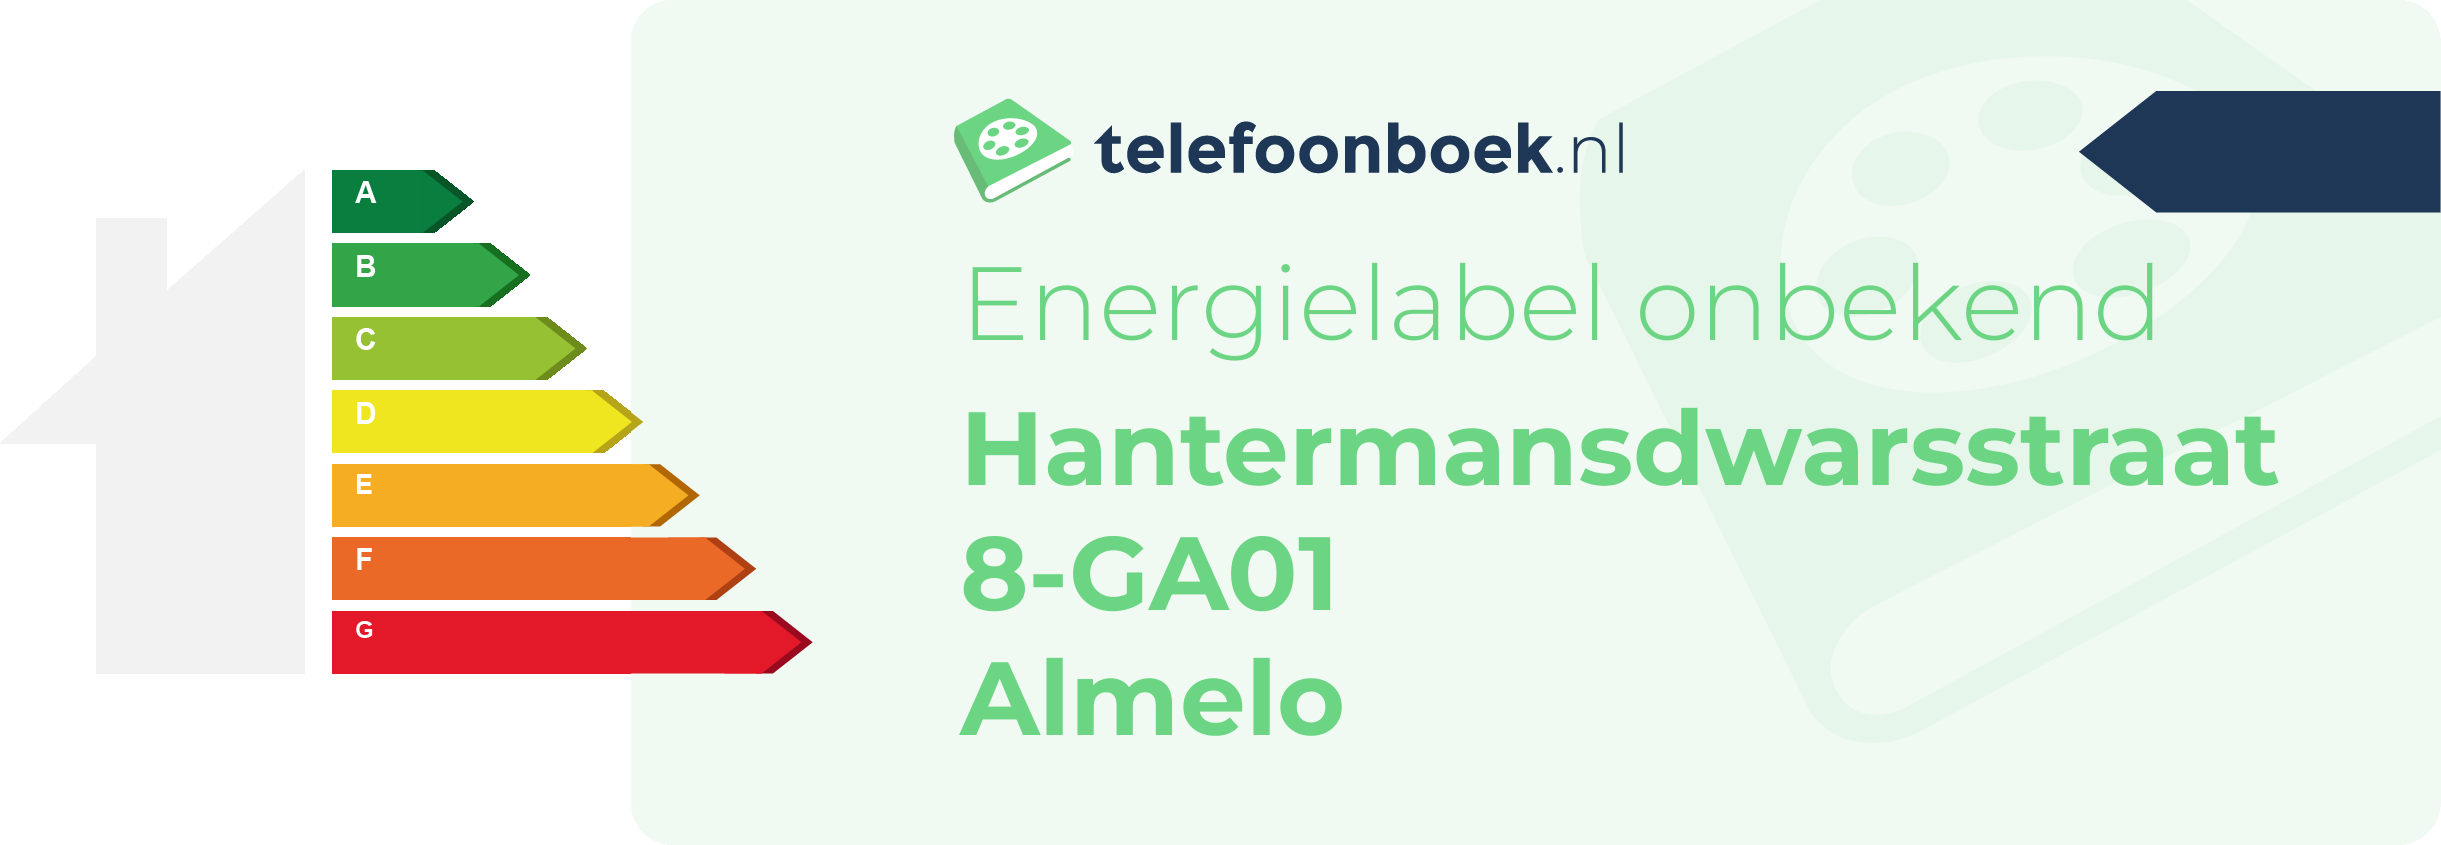 Energielabel Hantermansdwarsstraat 8-GA01 Almelo